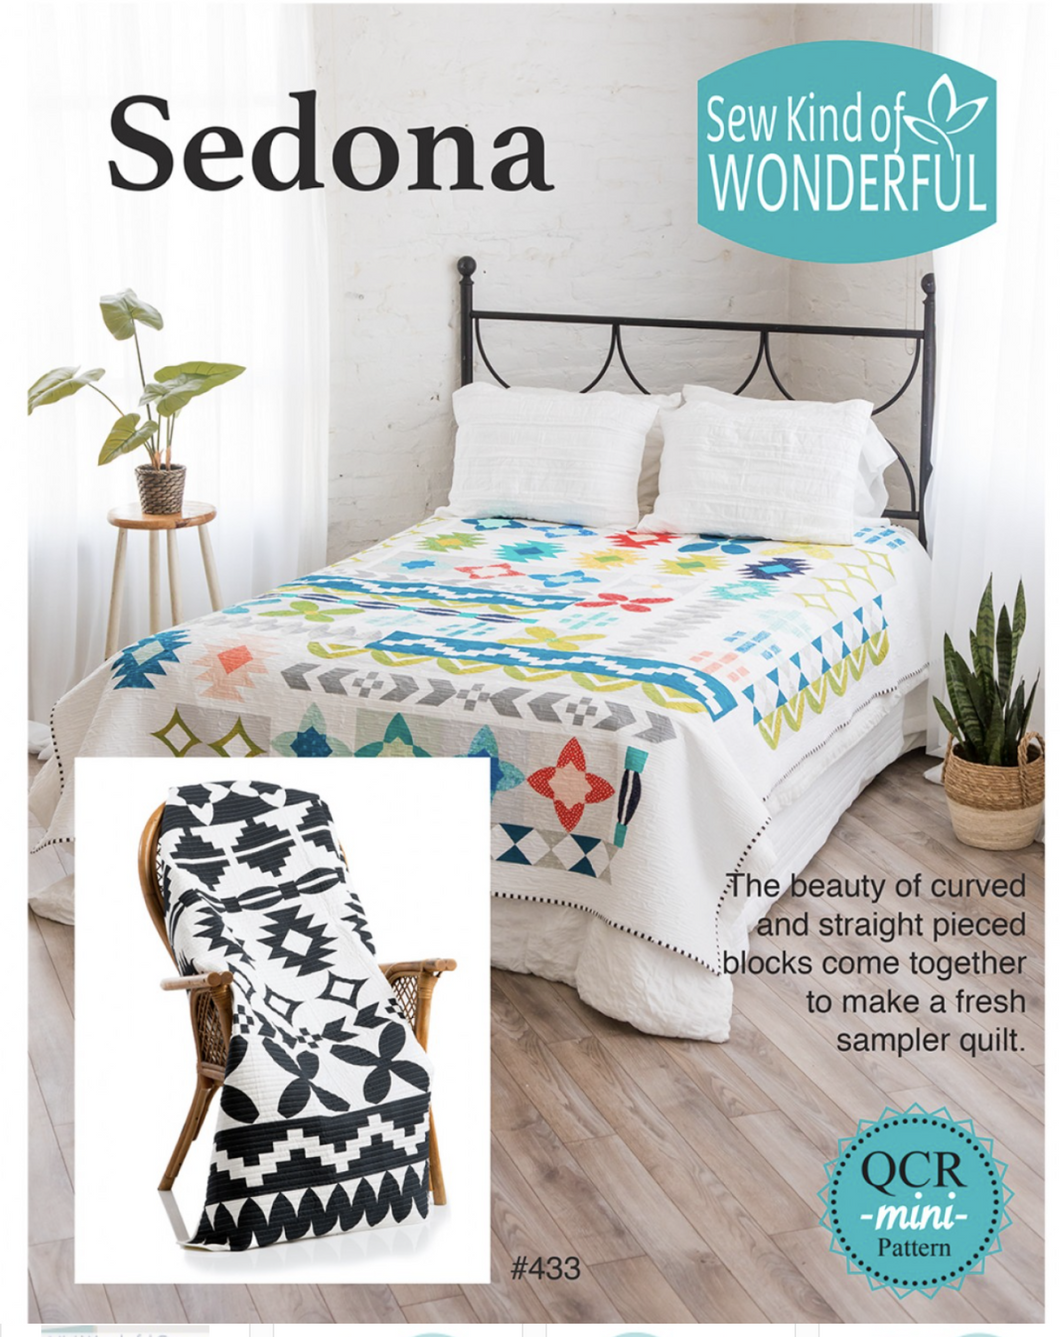 Sedona Pattern by Jenny Pedigo for Sew Kind of Wonderful